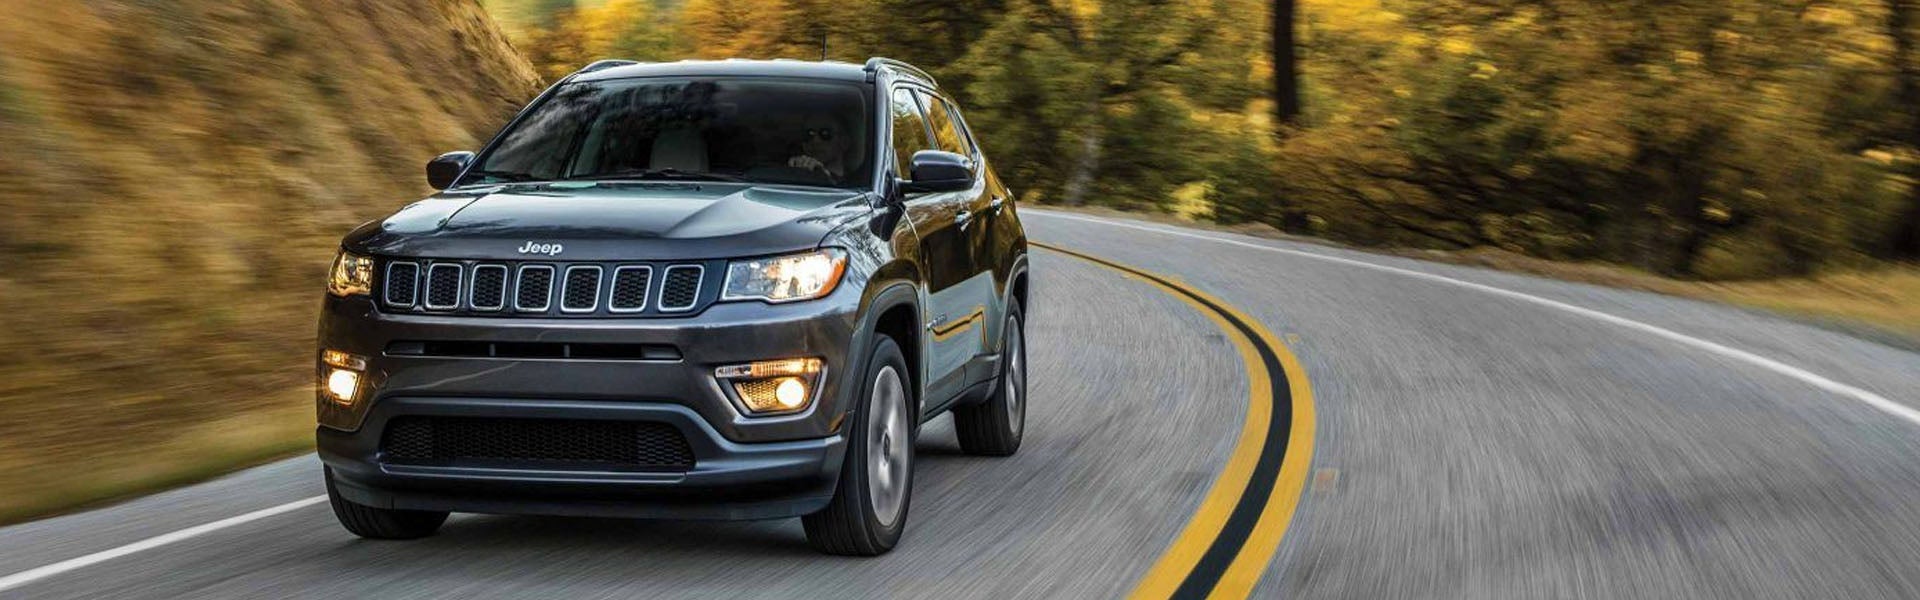 2019 Jeep Cherokee vs 2019 Chevrolet Equinox